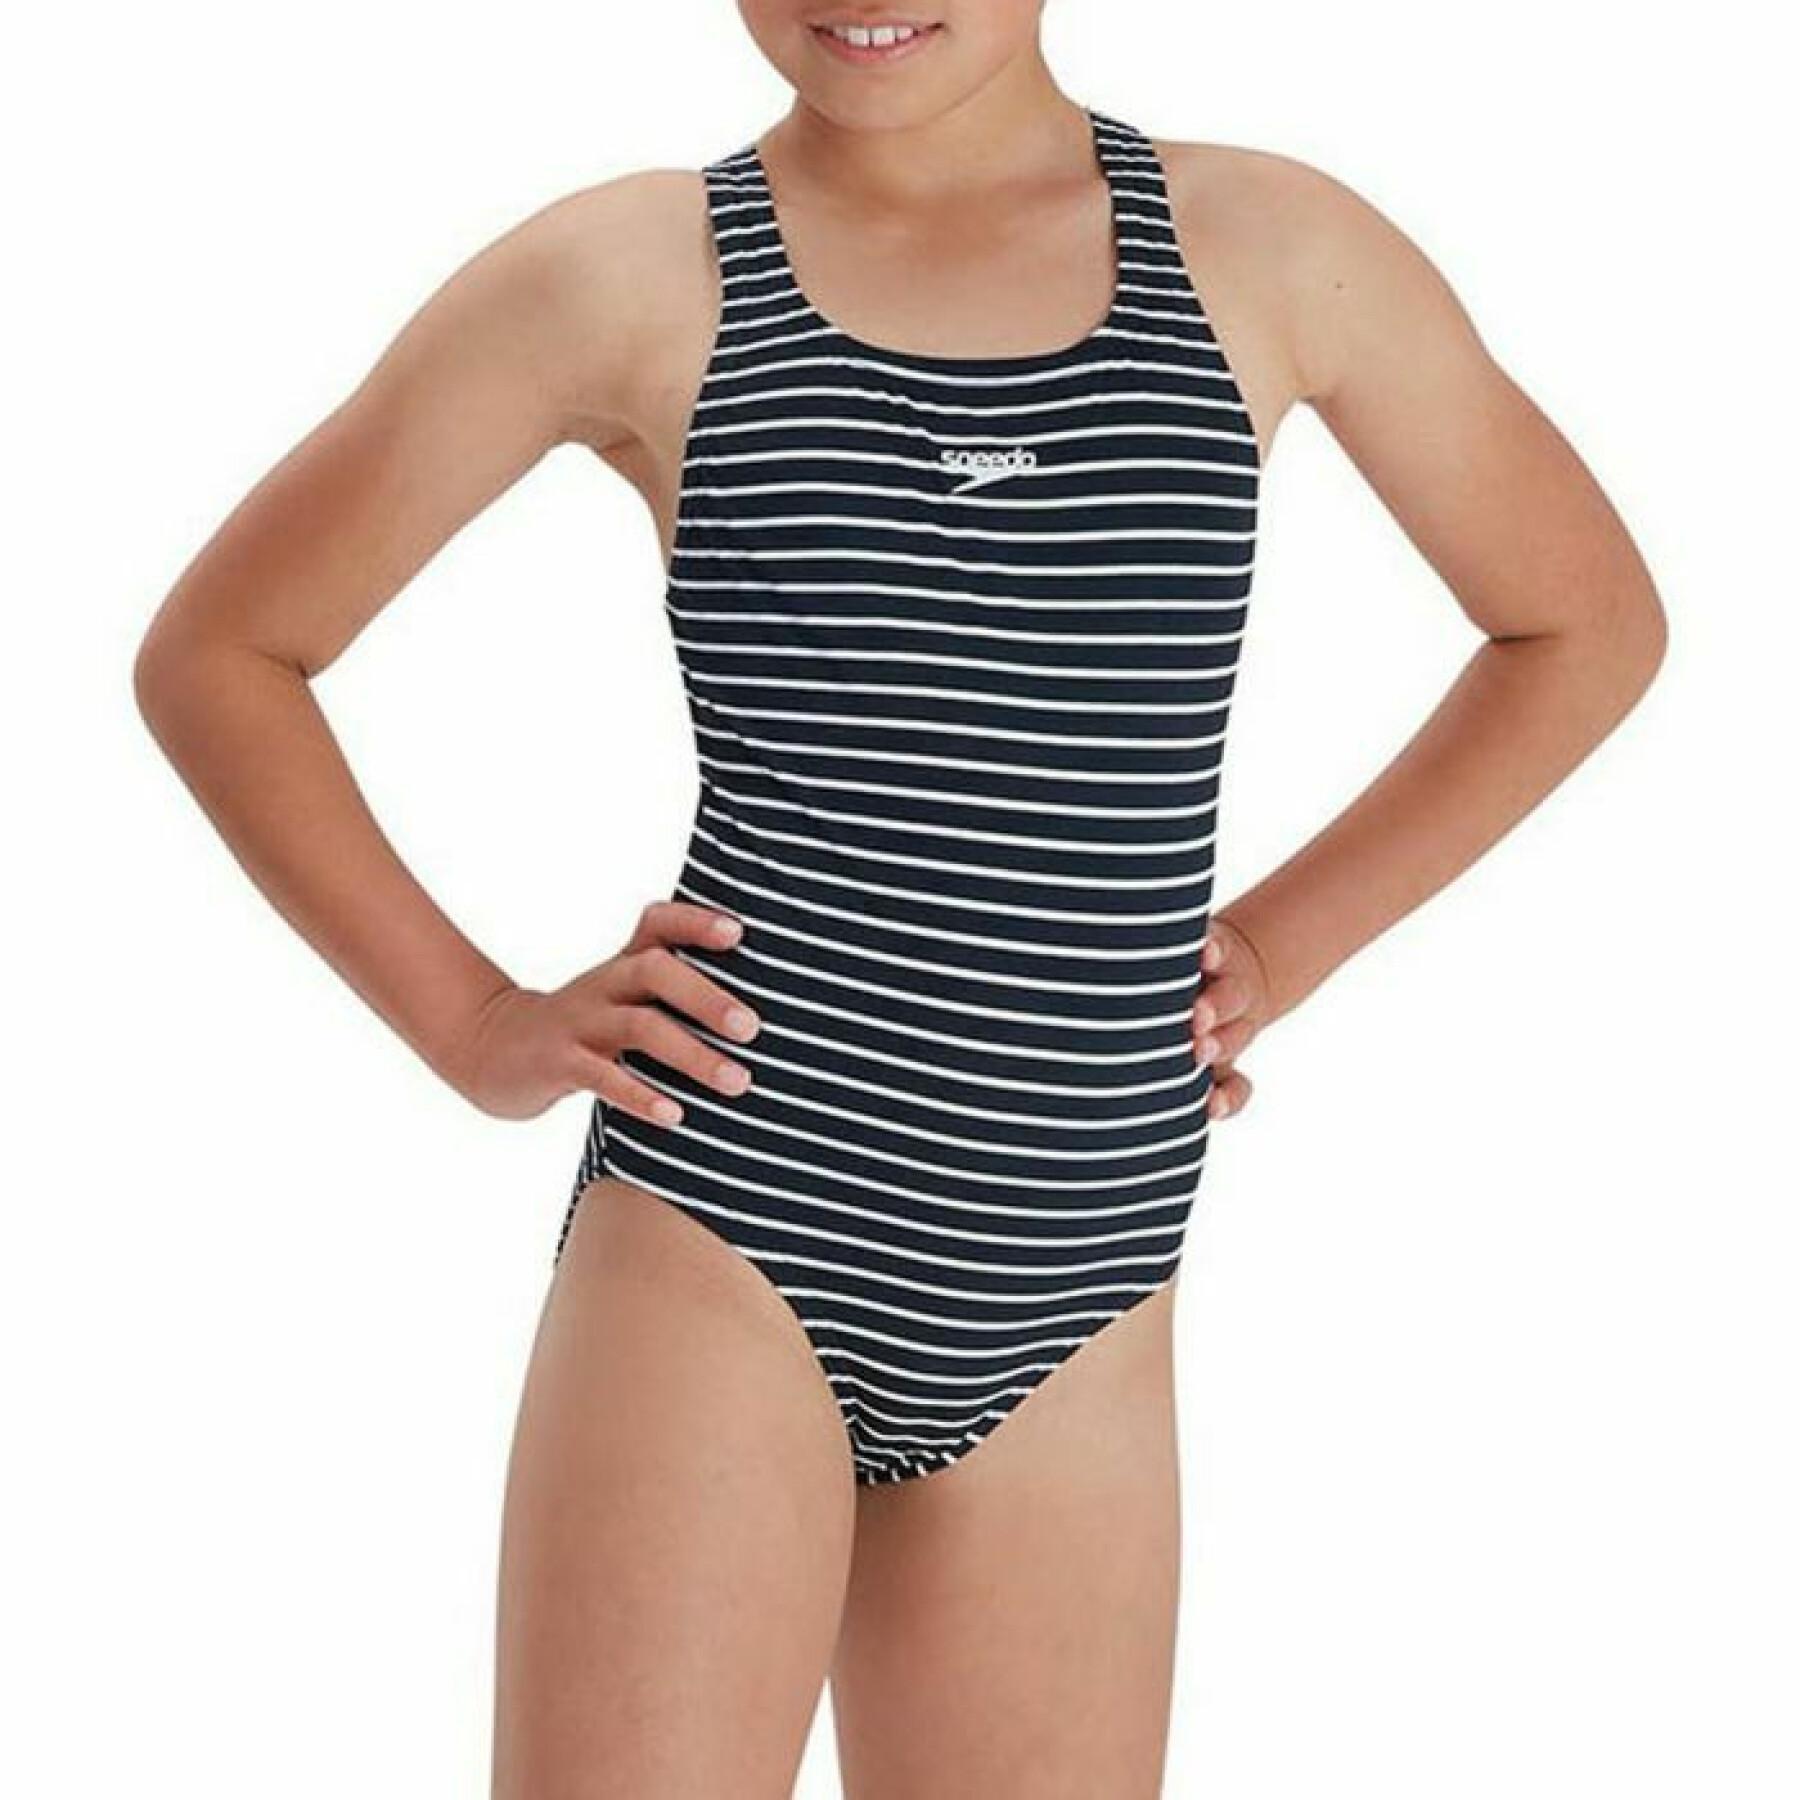 Speedo Girl's Swimsuit